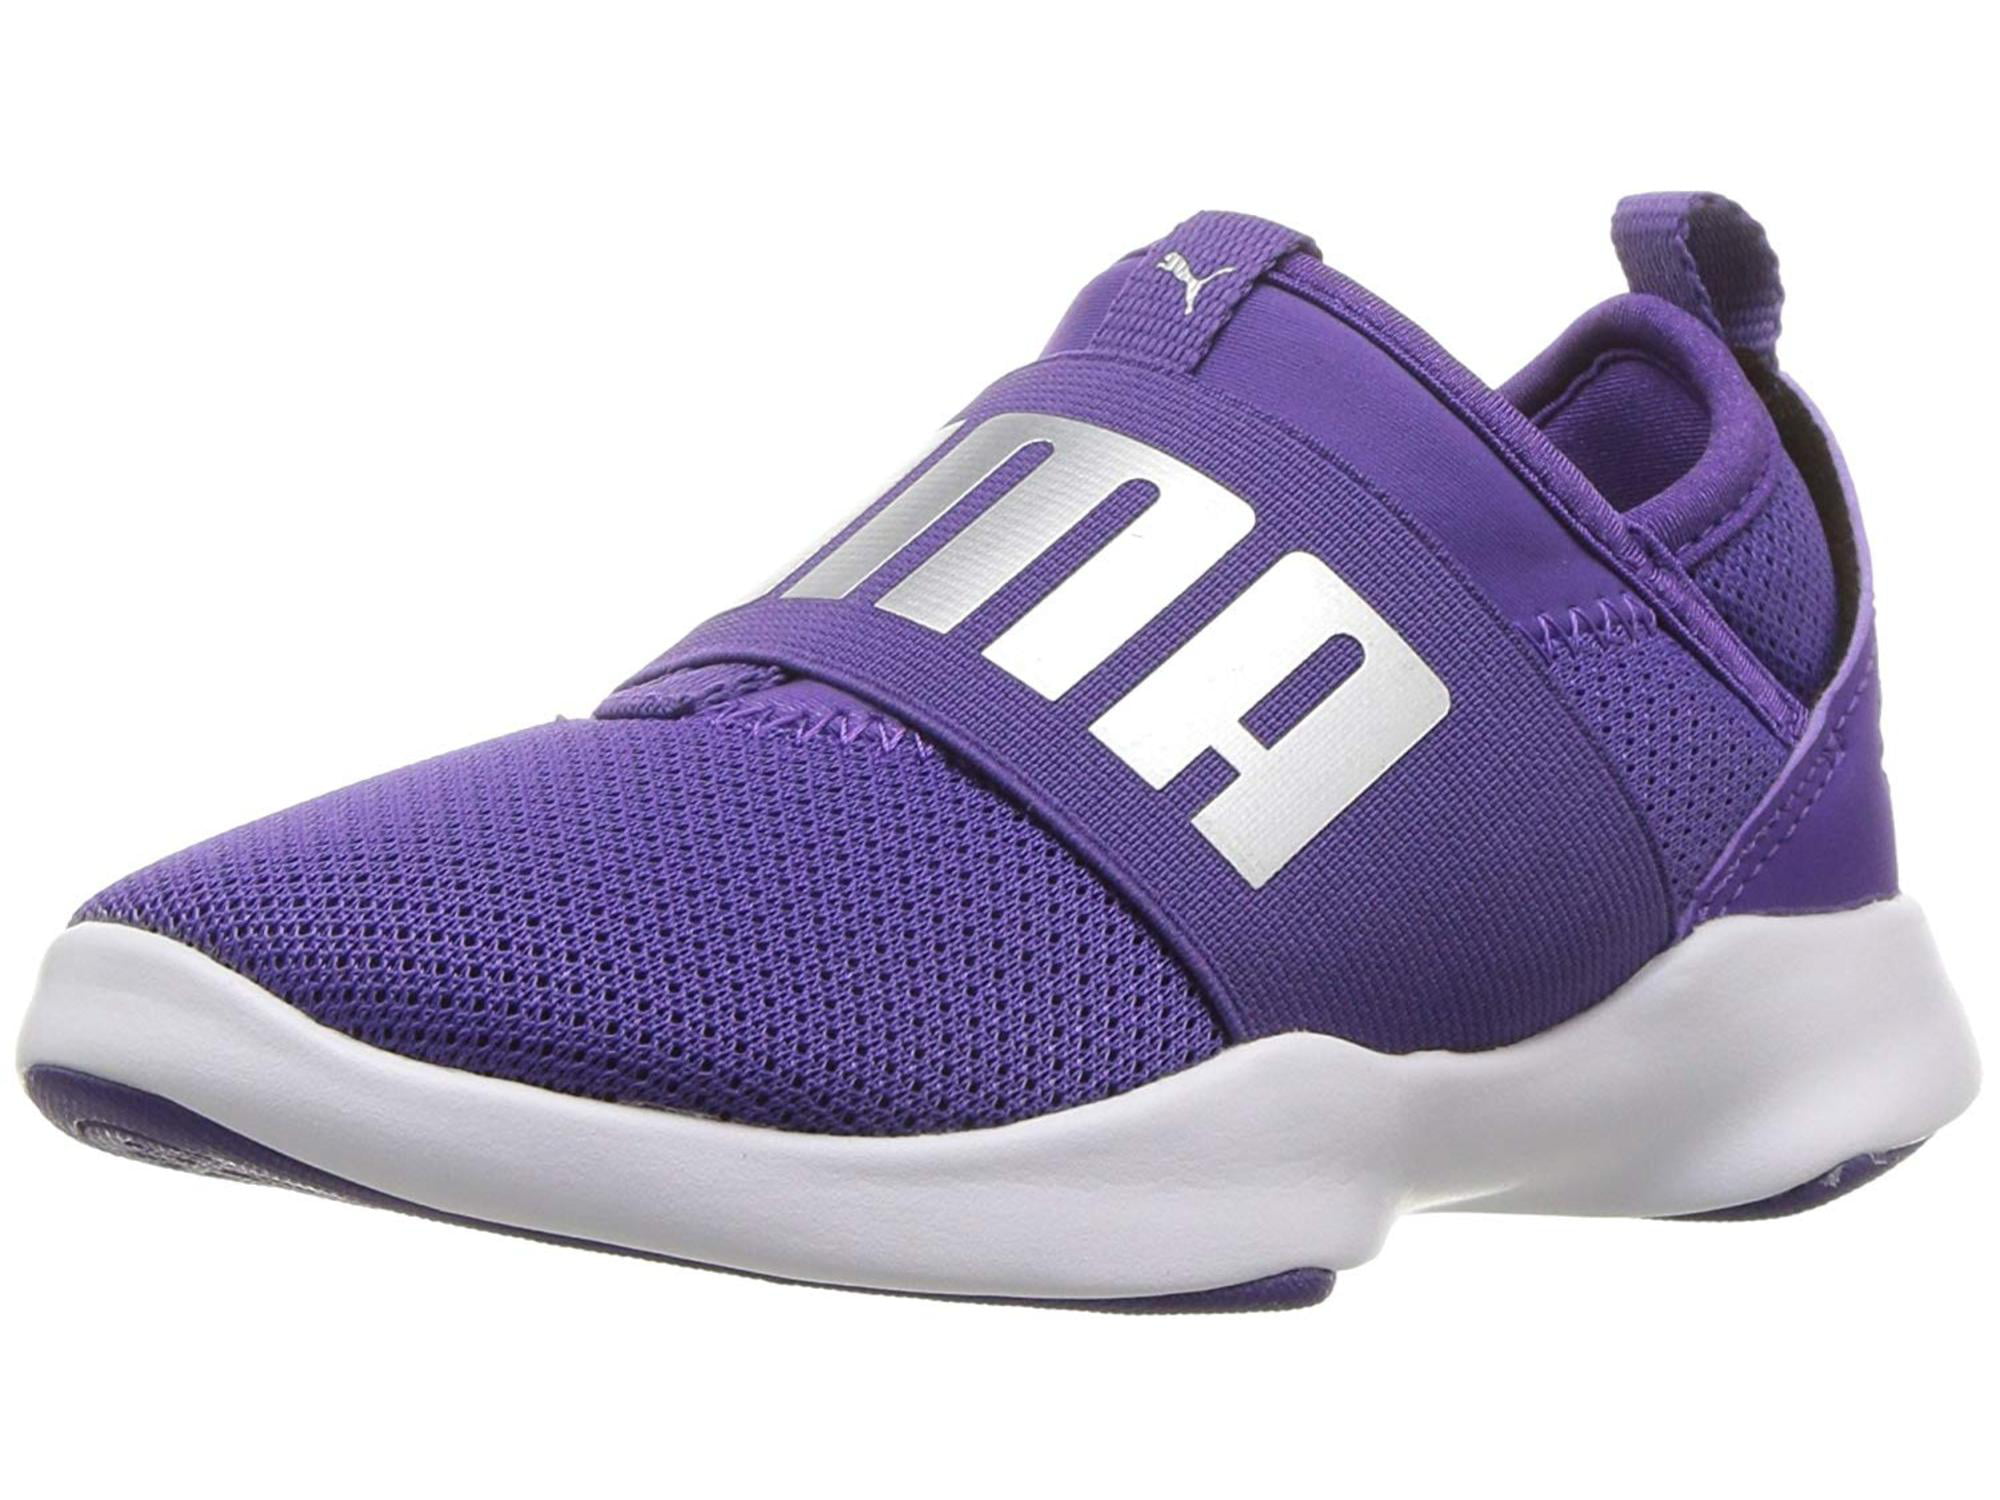 kids purple sneakers